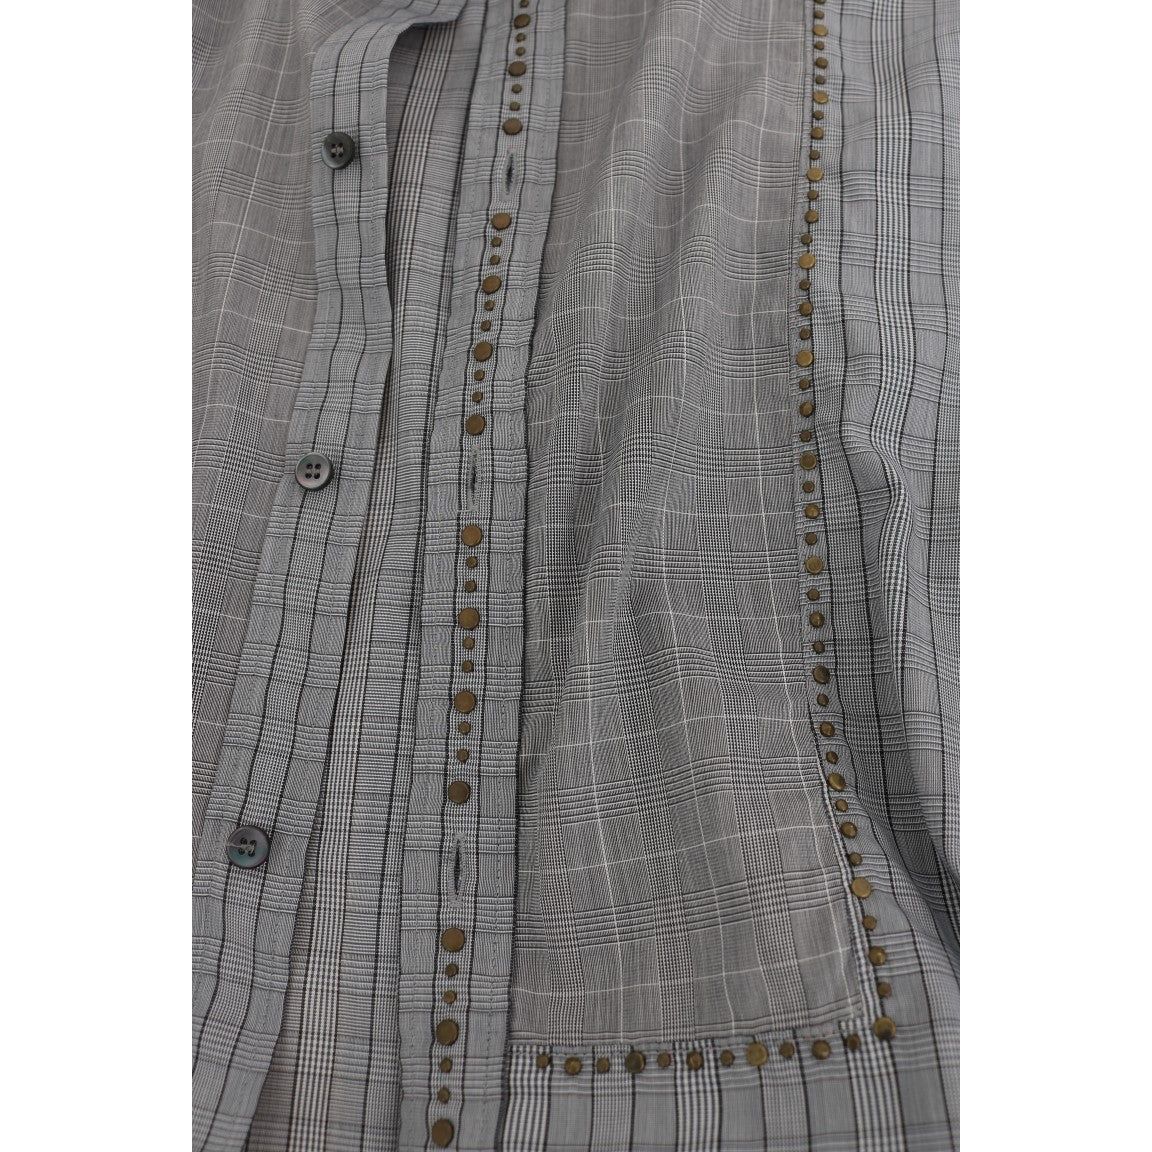 Dolce & Gabbana Elegant Gray Checkered Slim Fit Casual Shirt gray-check-gold-cotton-slim-fit-shirt 517763-gray-check-gold-cotton-slim-fit-shirt-2-8.jpg